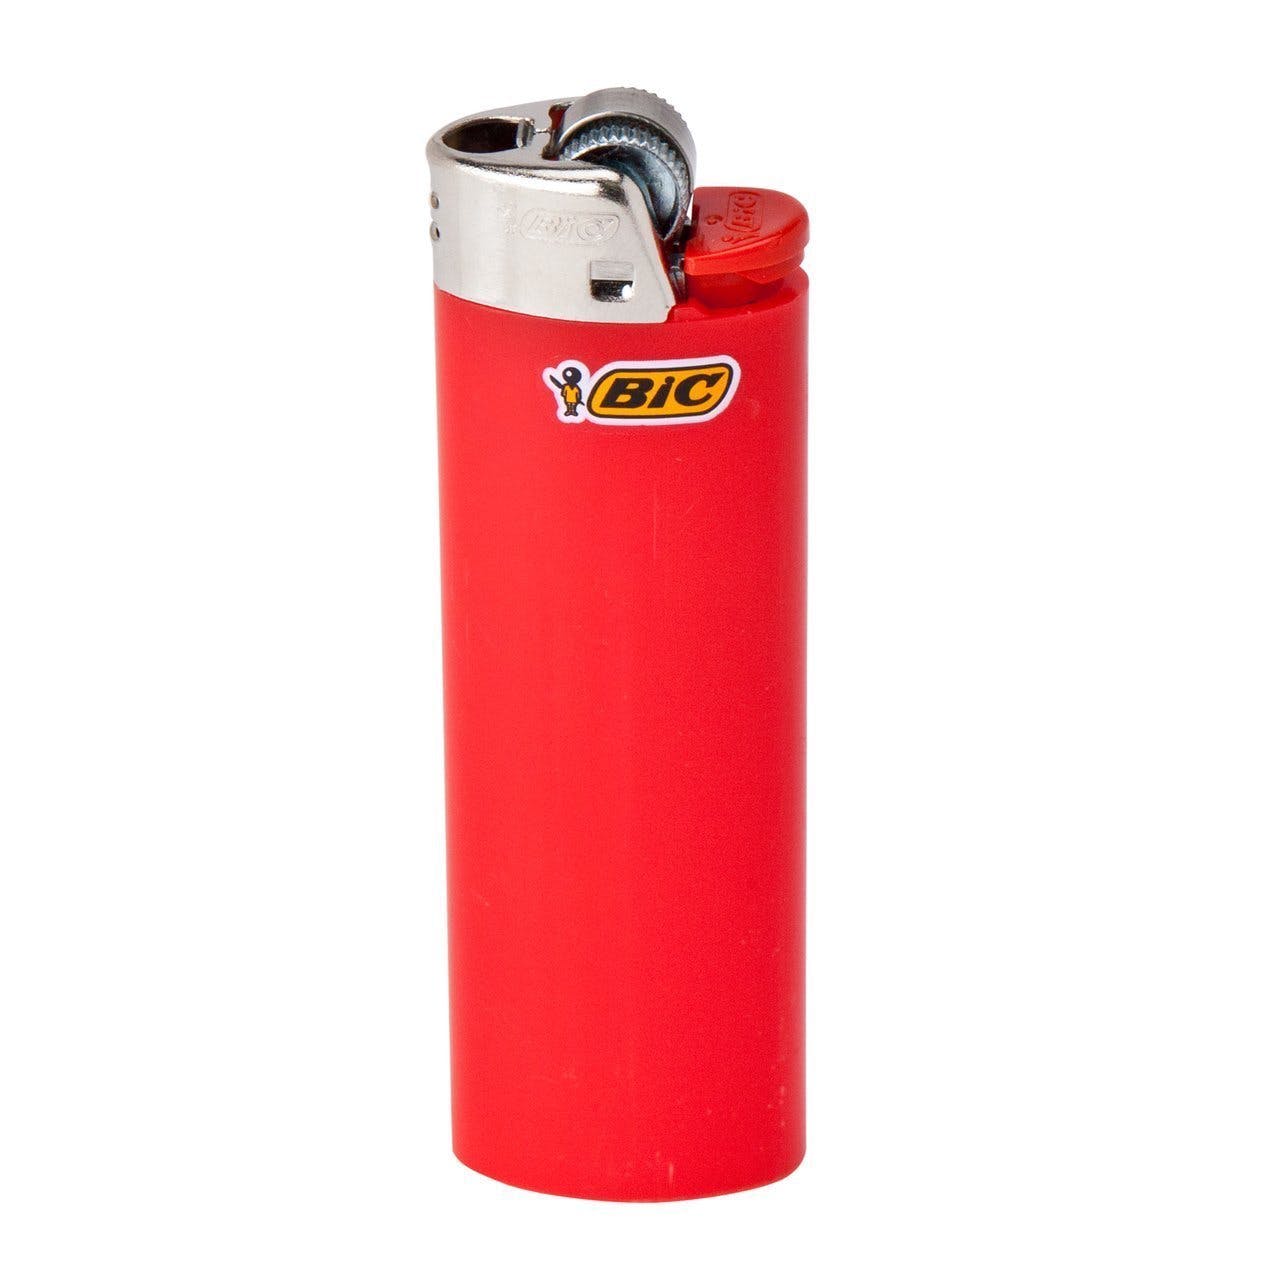 NM0017 Bic Lighters - Large